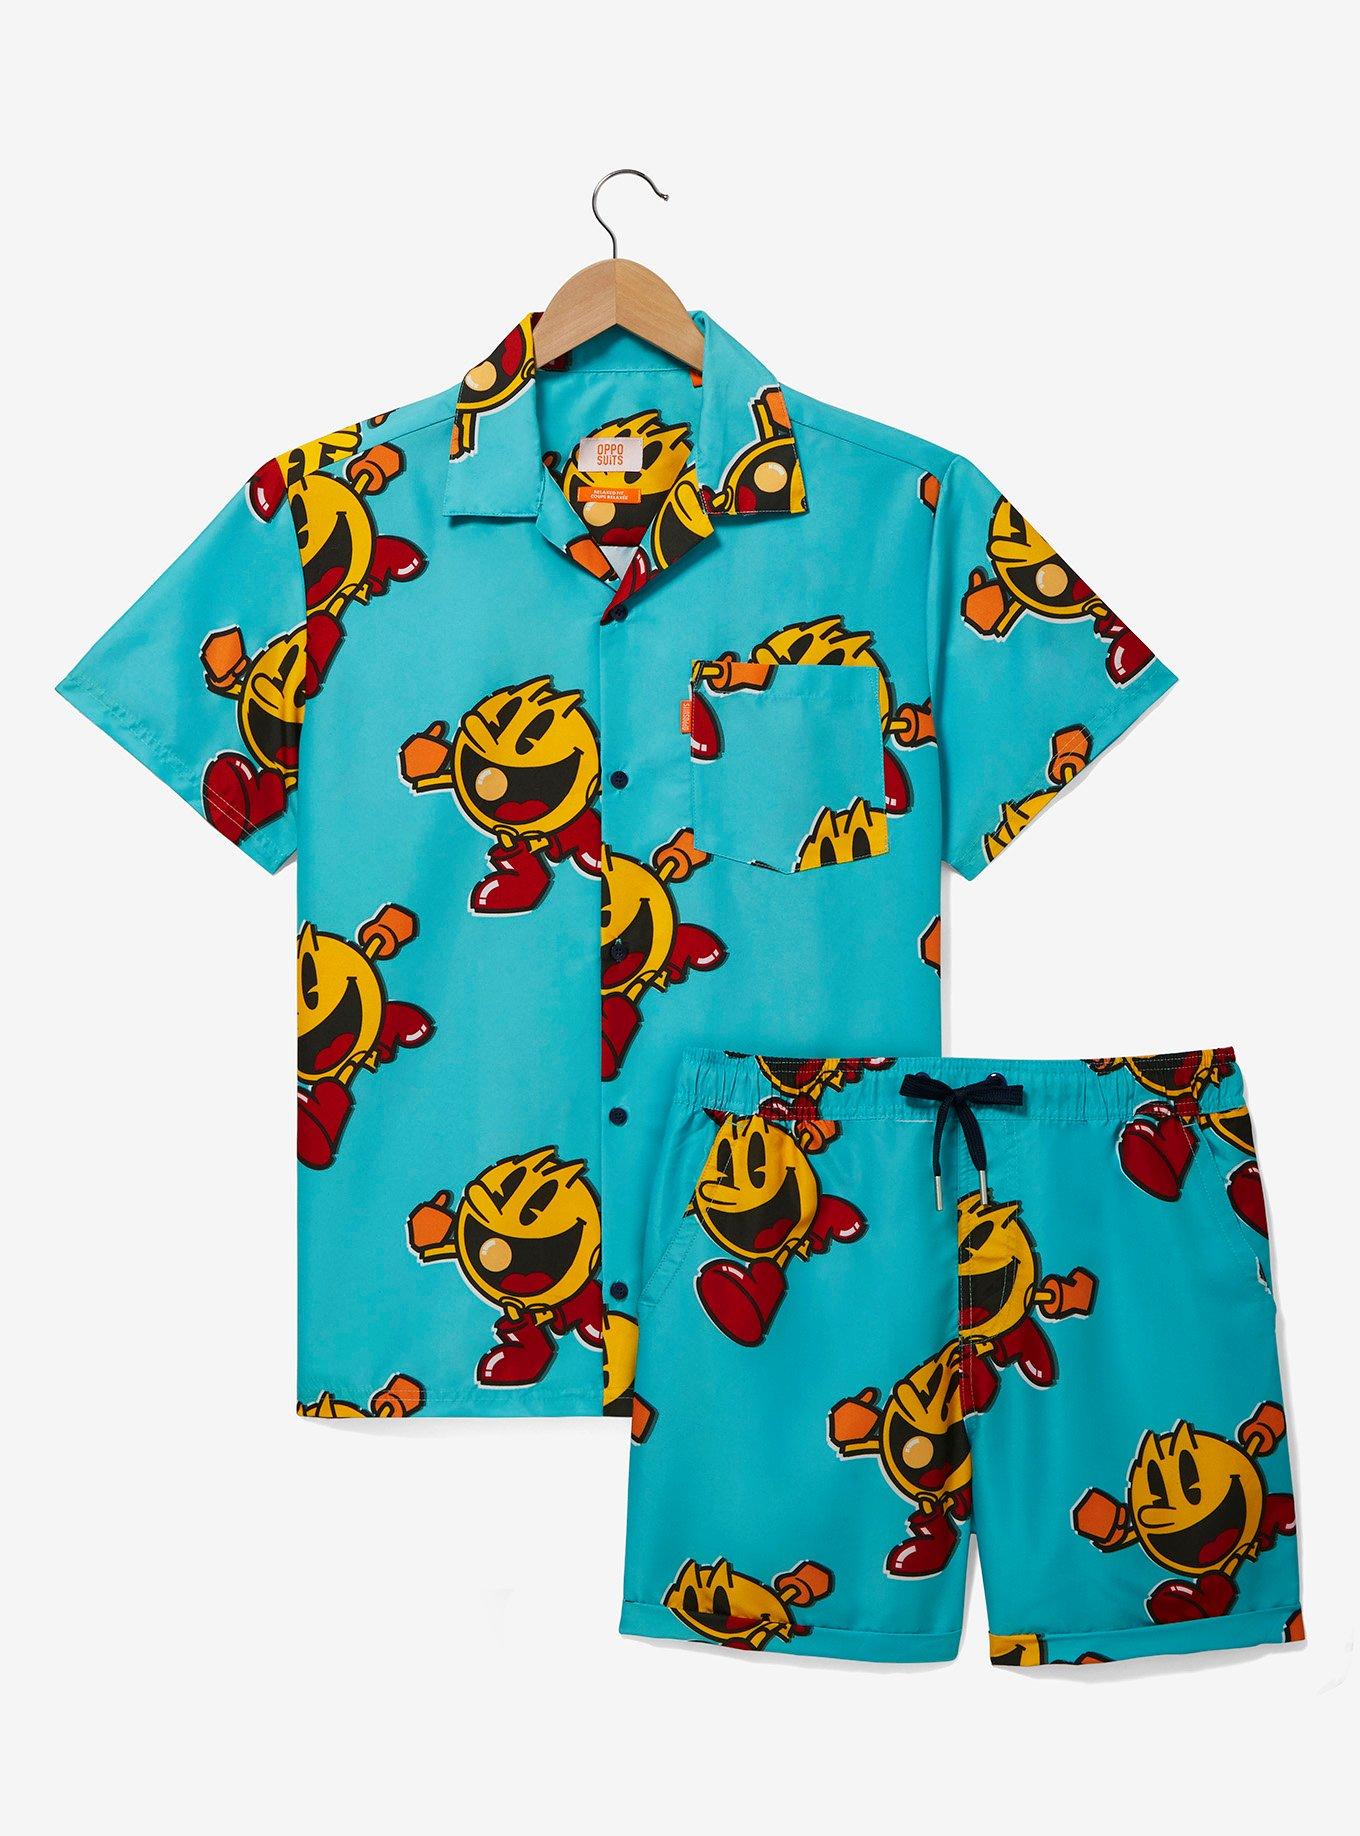 OppoSuits Pac-Man Allover Print Shorts, BLUE, alternate